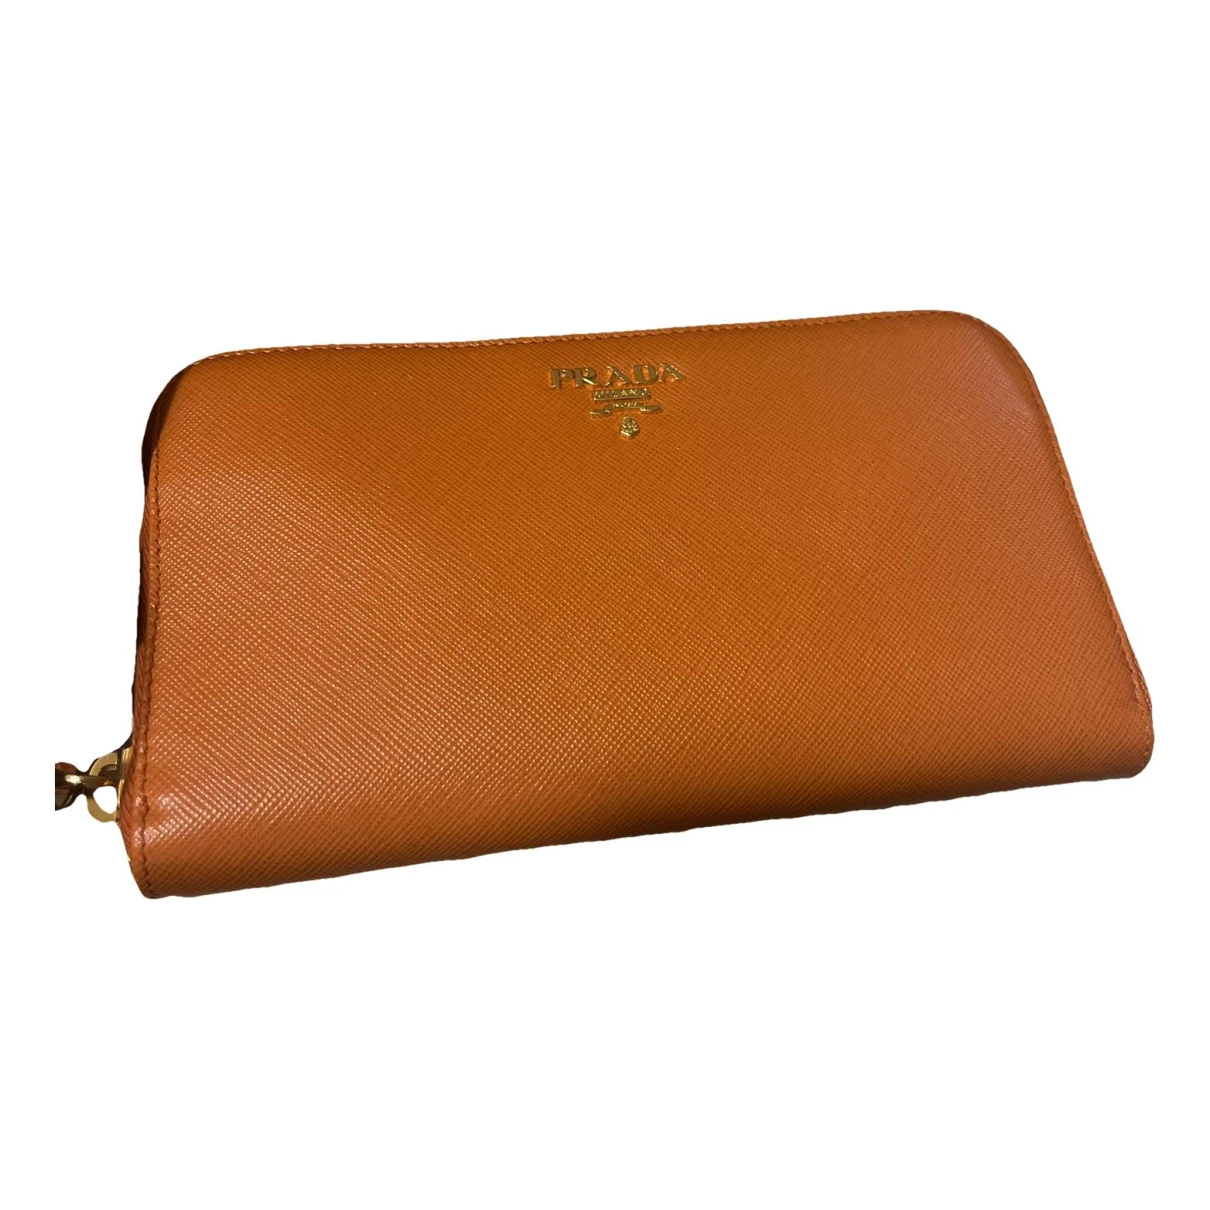 Pre-owned Prada Leather Wallet In Orange